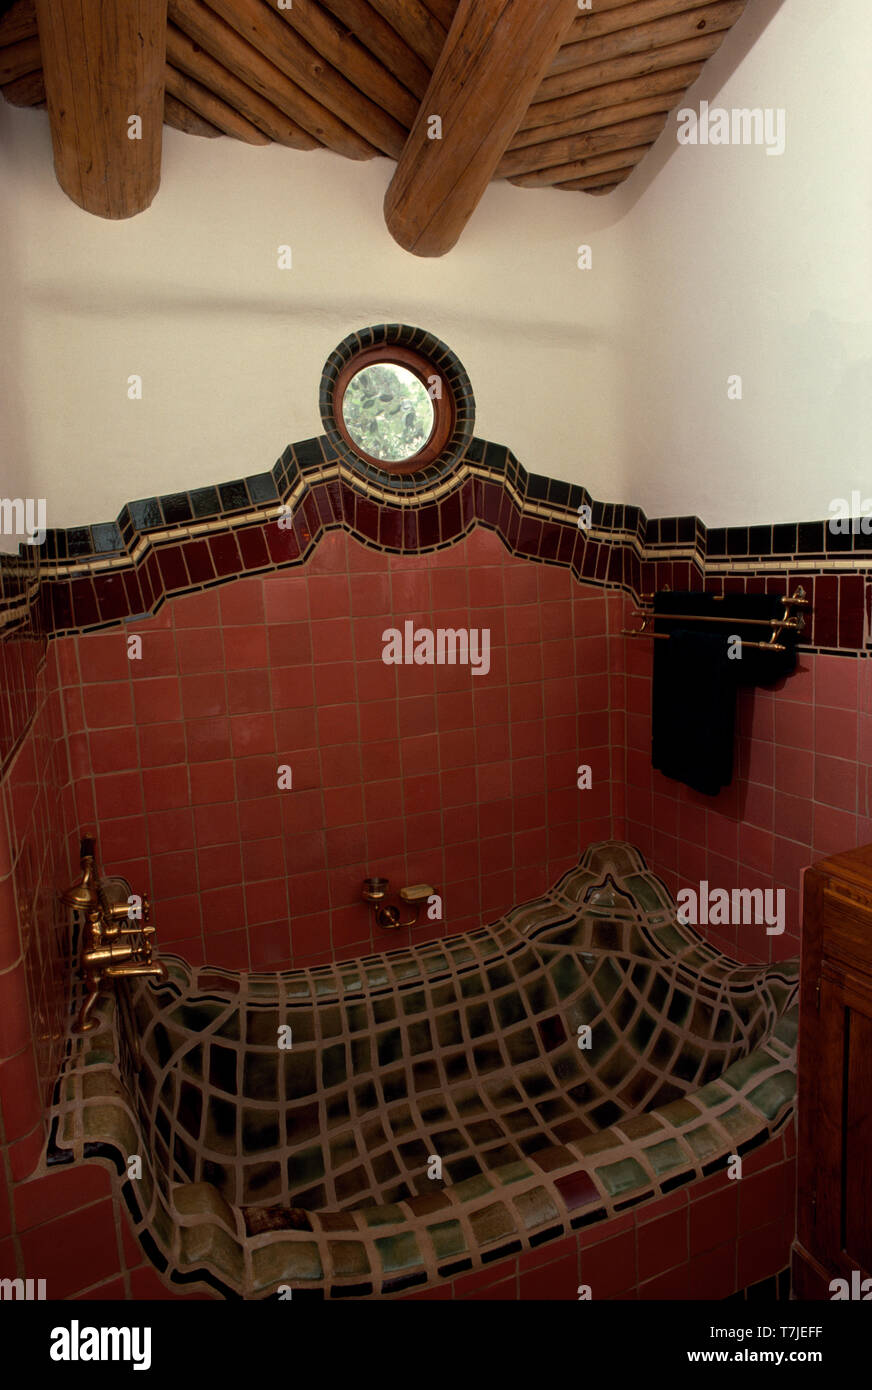 Irregular shaped bath lined with ceramic tiles Stock Photo